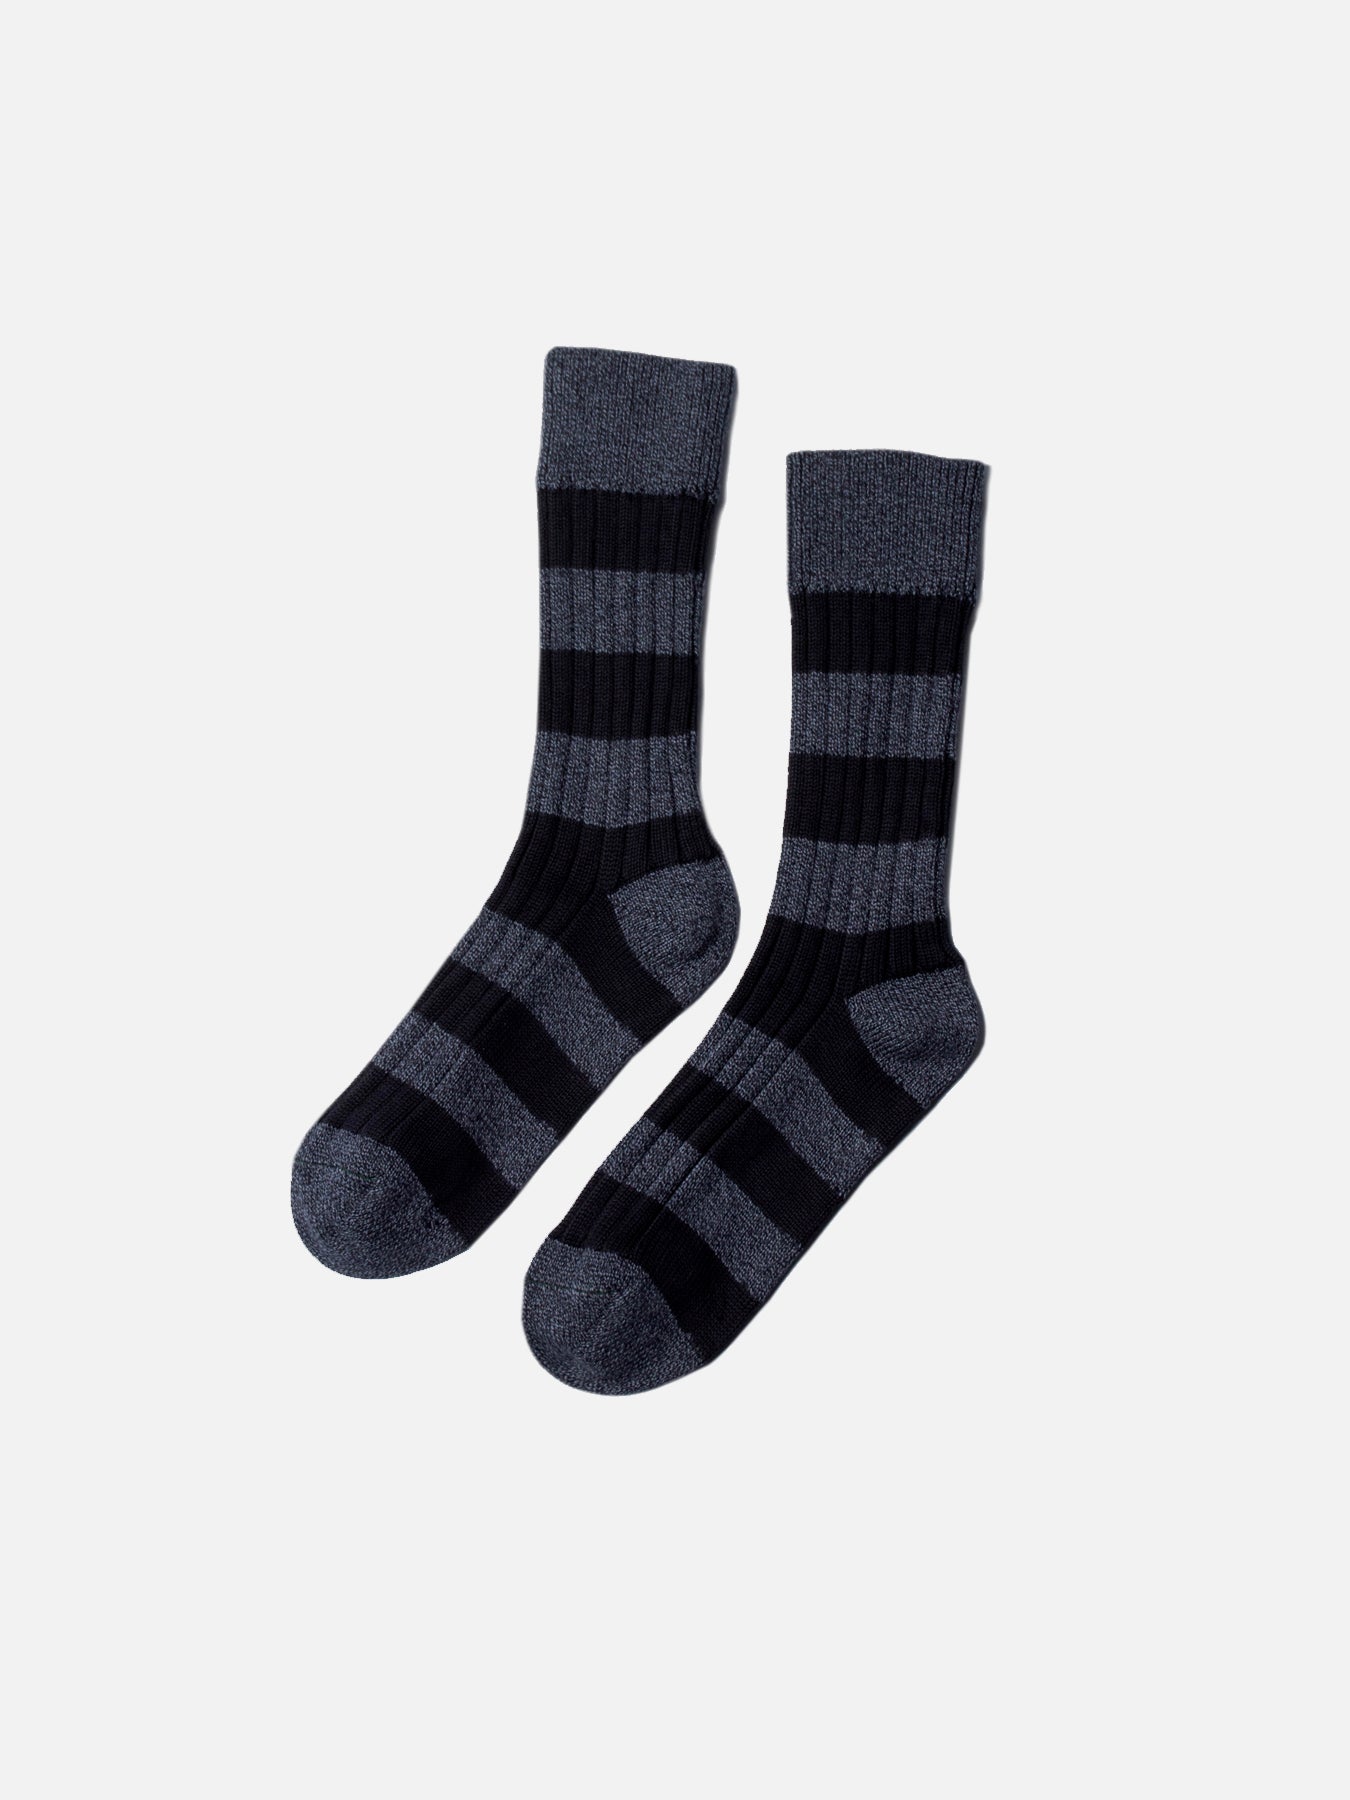 Hawick Cotton Socks in Black/Grey Stripe